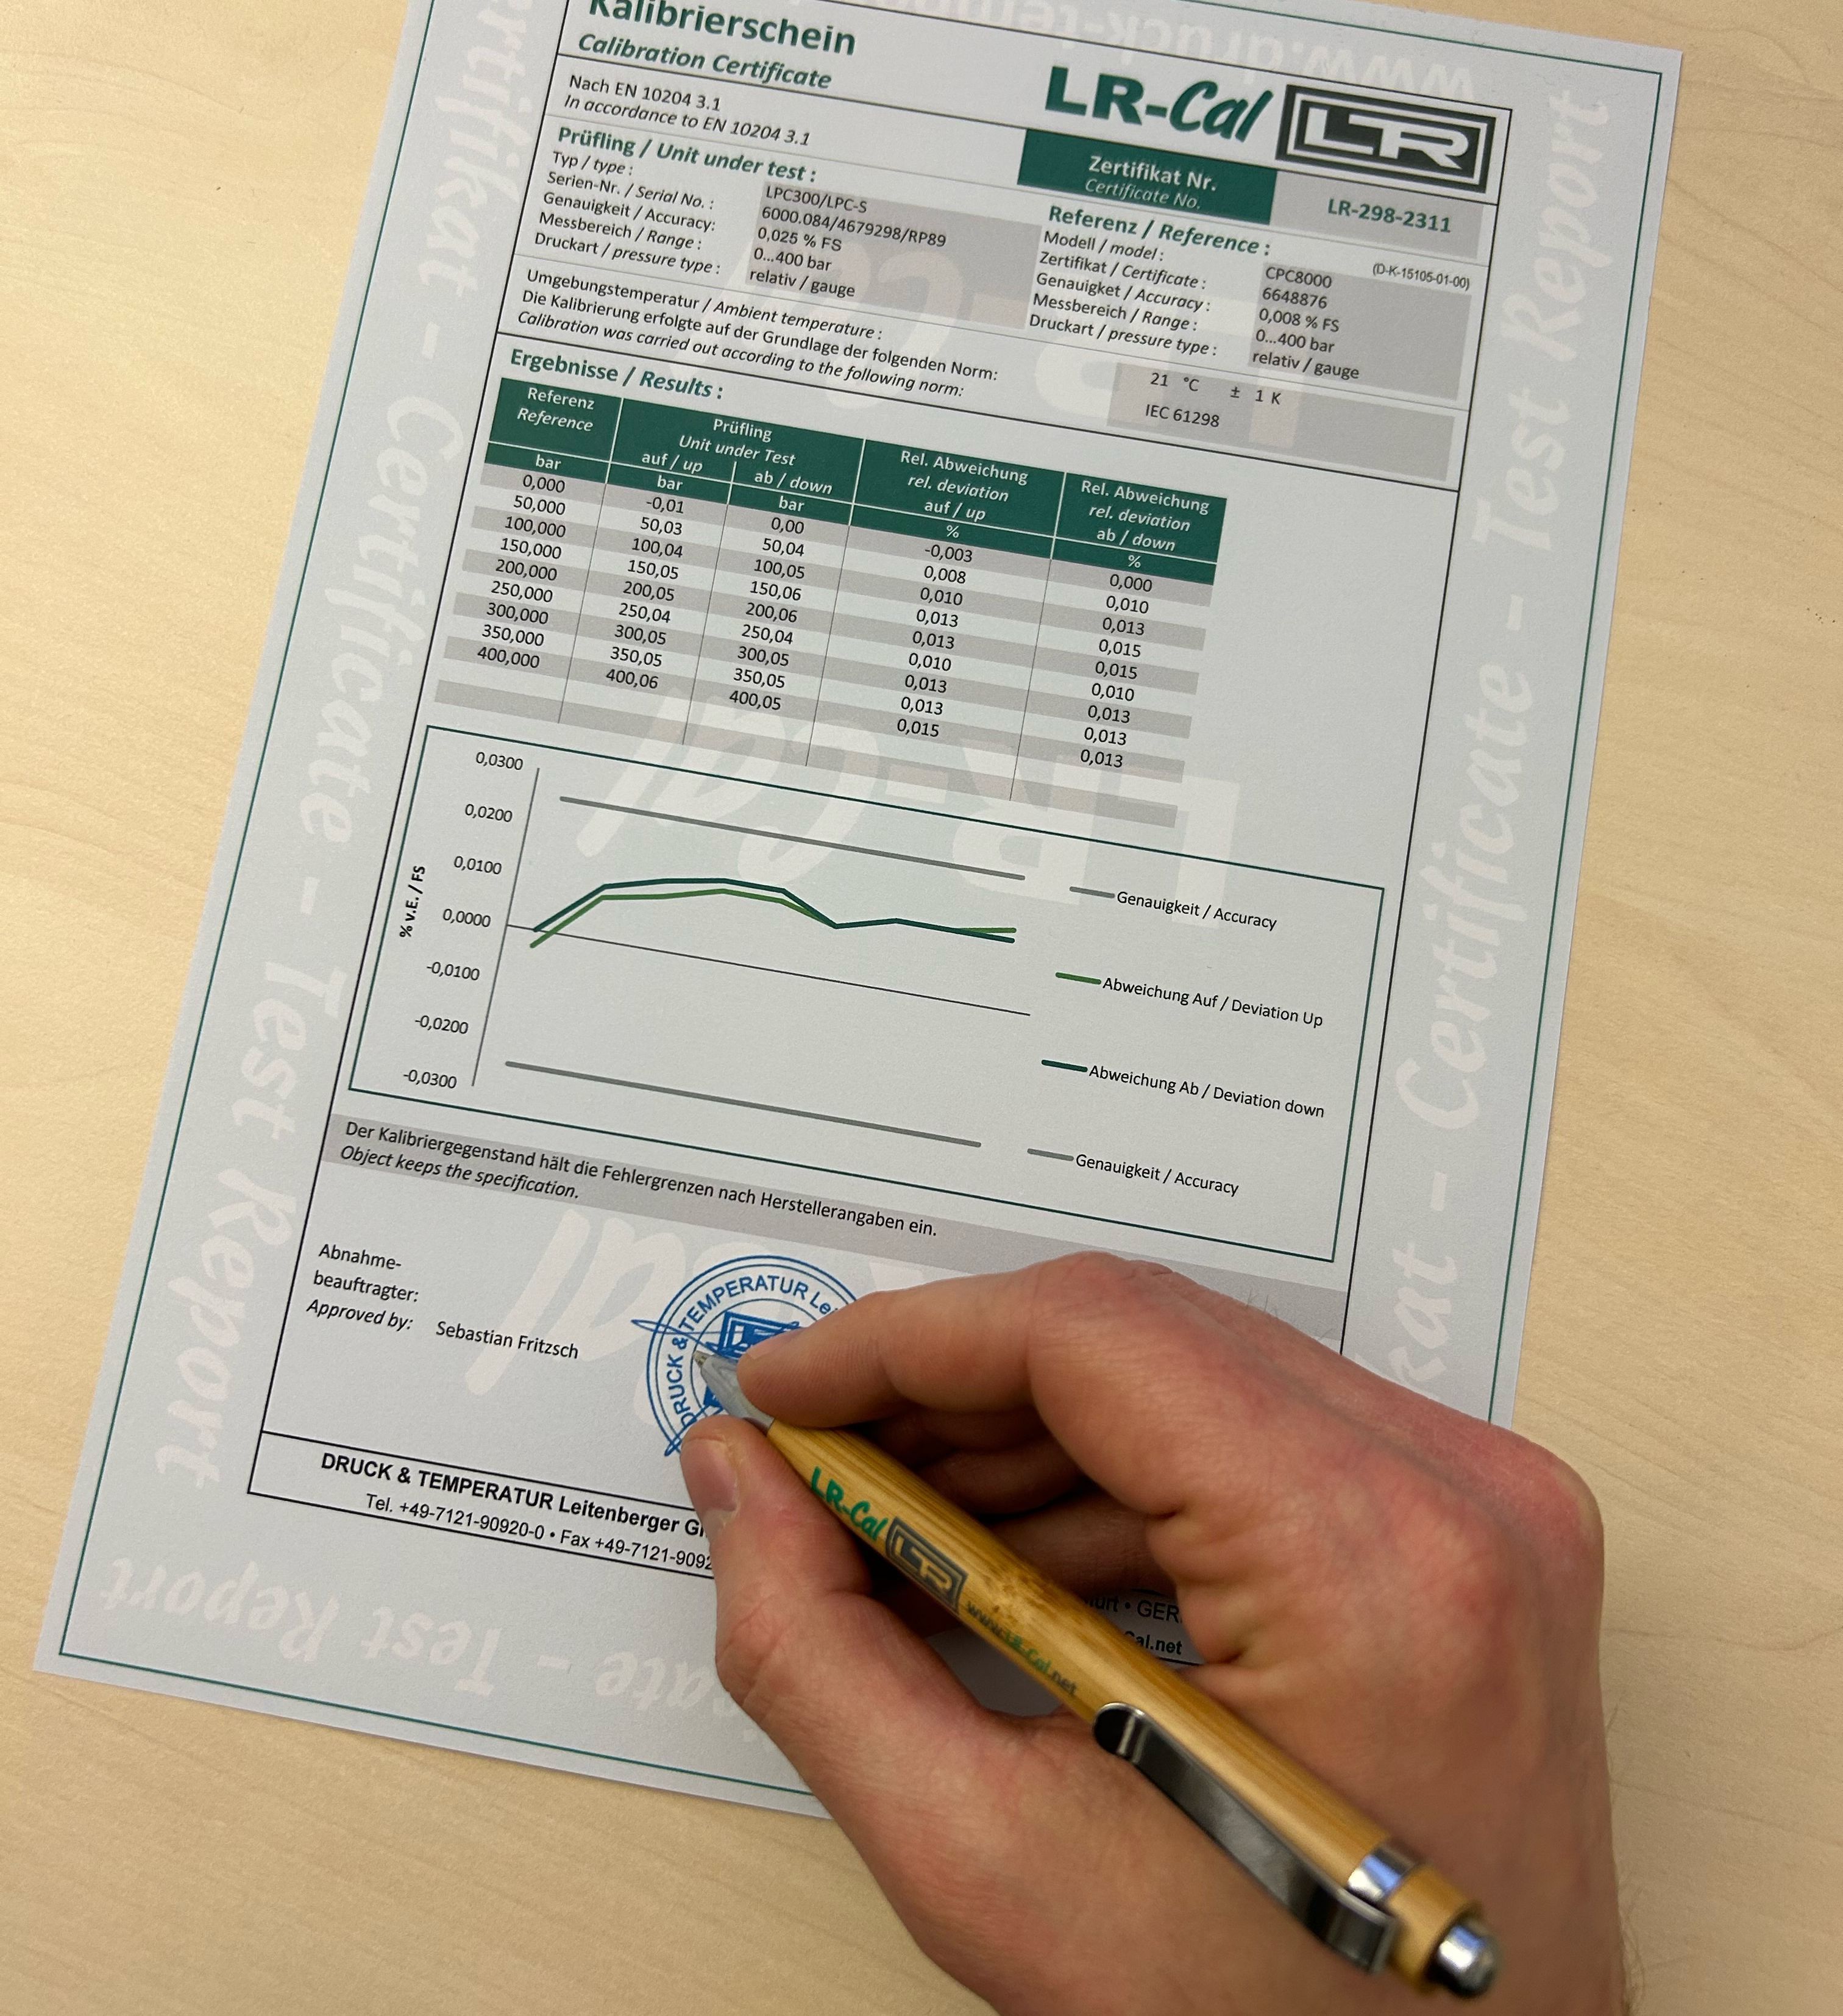 Calibration certificates - a service of DRUCK & TEMPERATUR Leitenberger